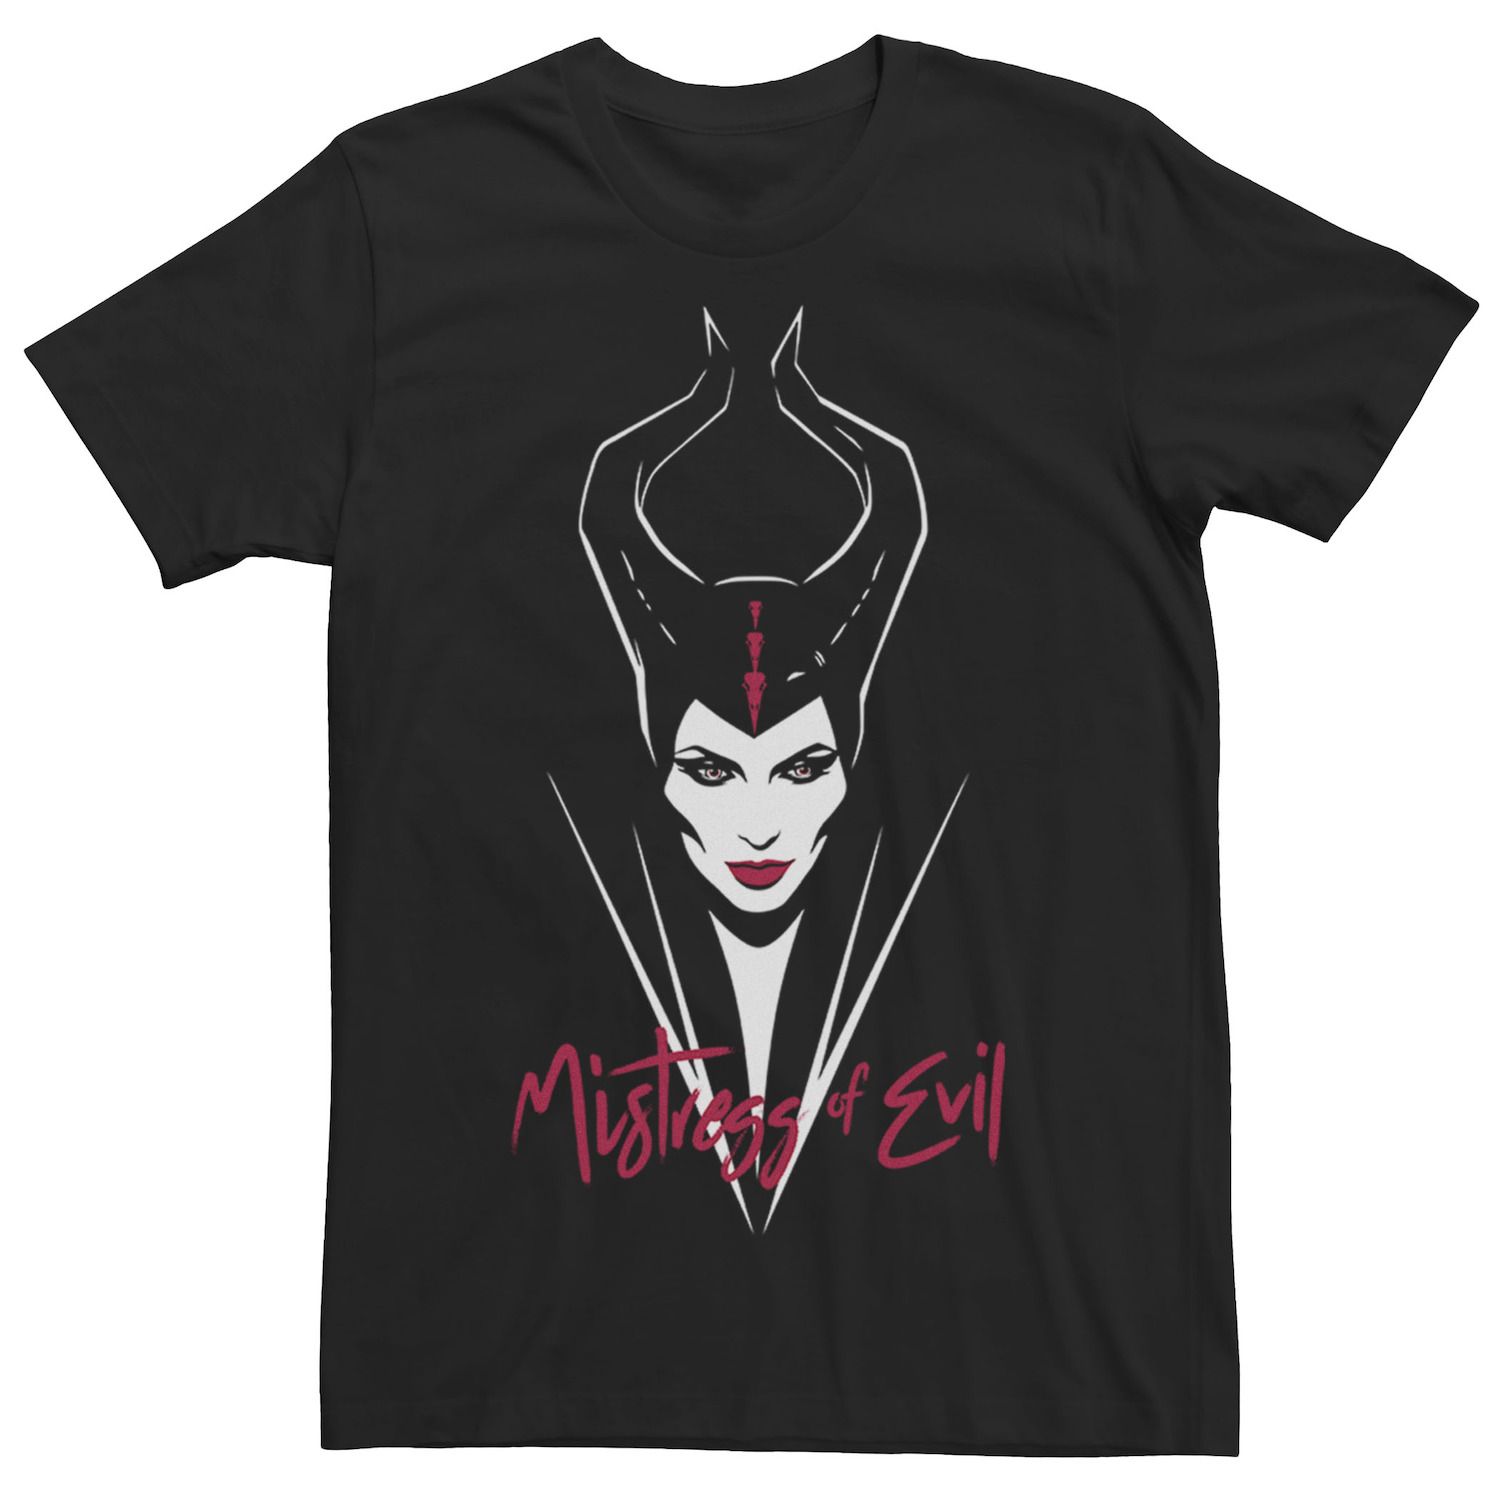 Мужская футболка Disney Maleficent Mistress Of Evil с портретом